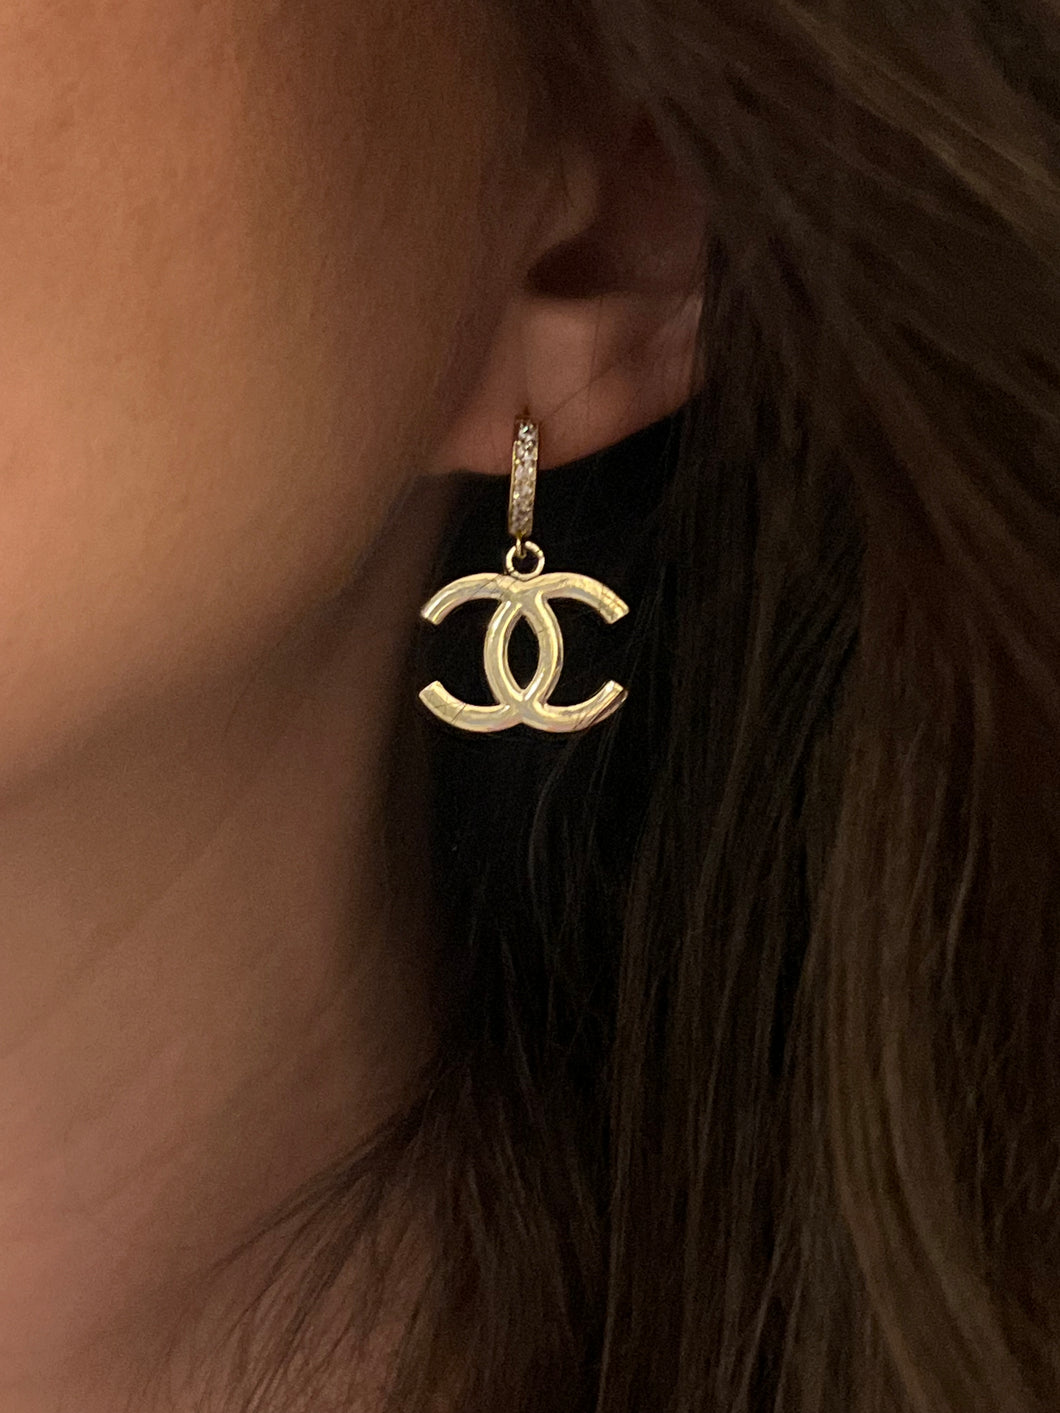 Repurposed Gold Charm Earrings